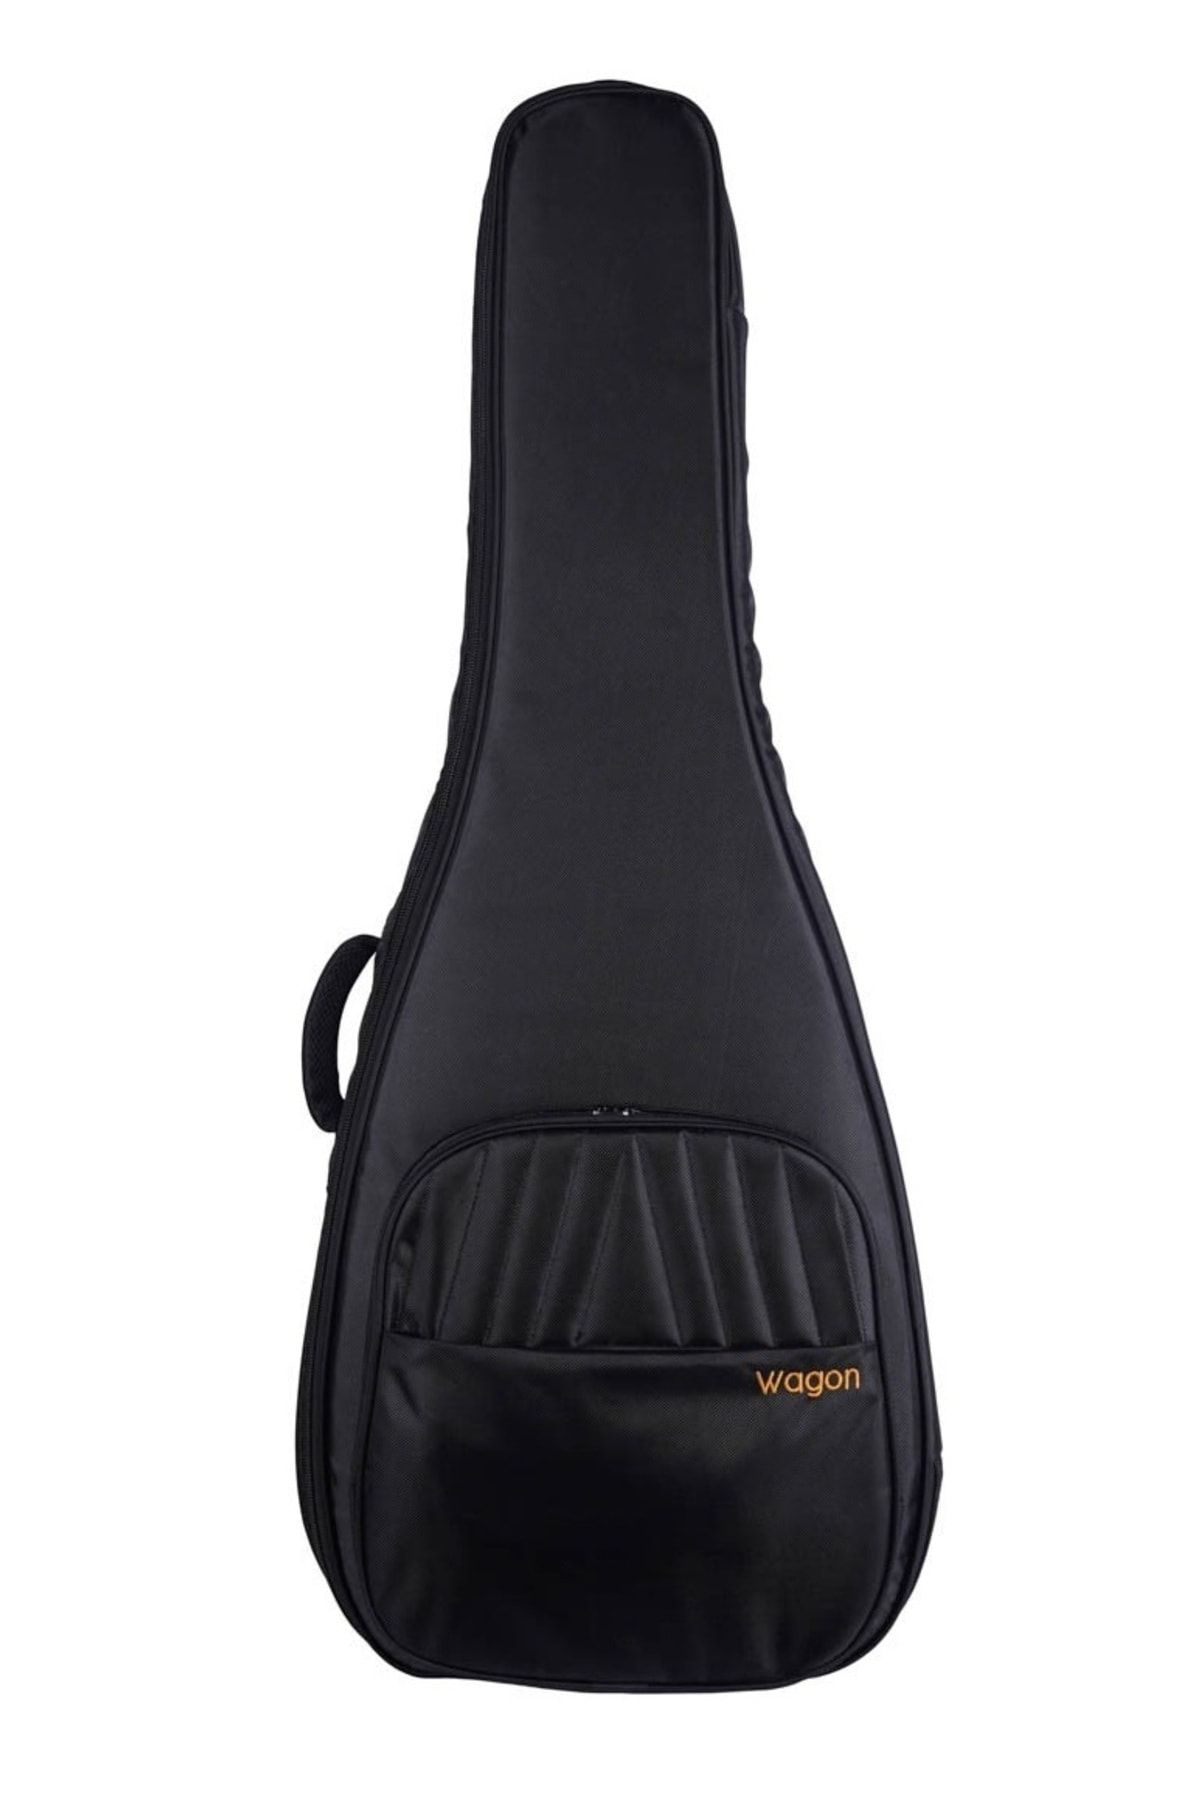 Wagon Case 04 Serisi 04-ACG Siyah Akustik Gitar Çantası